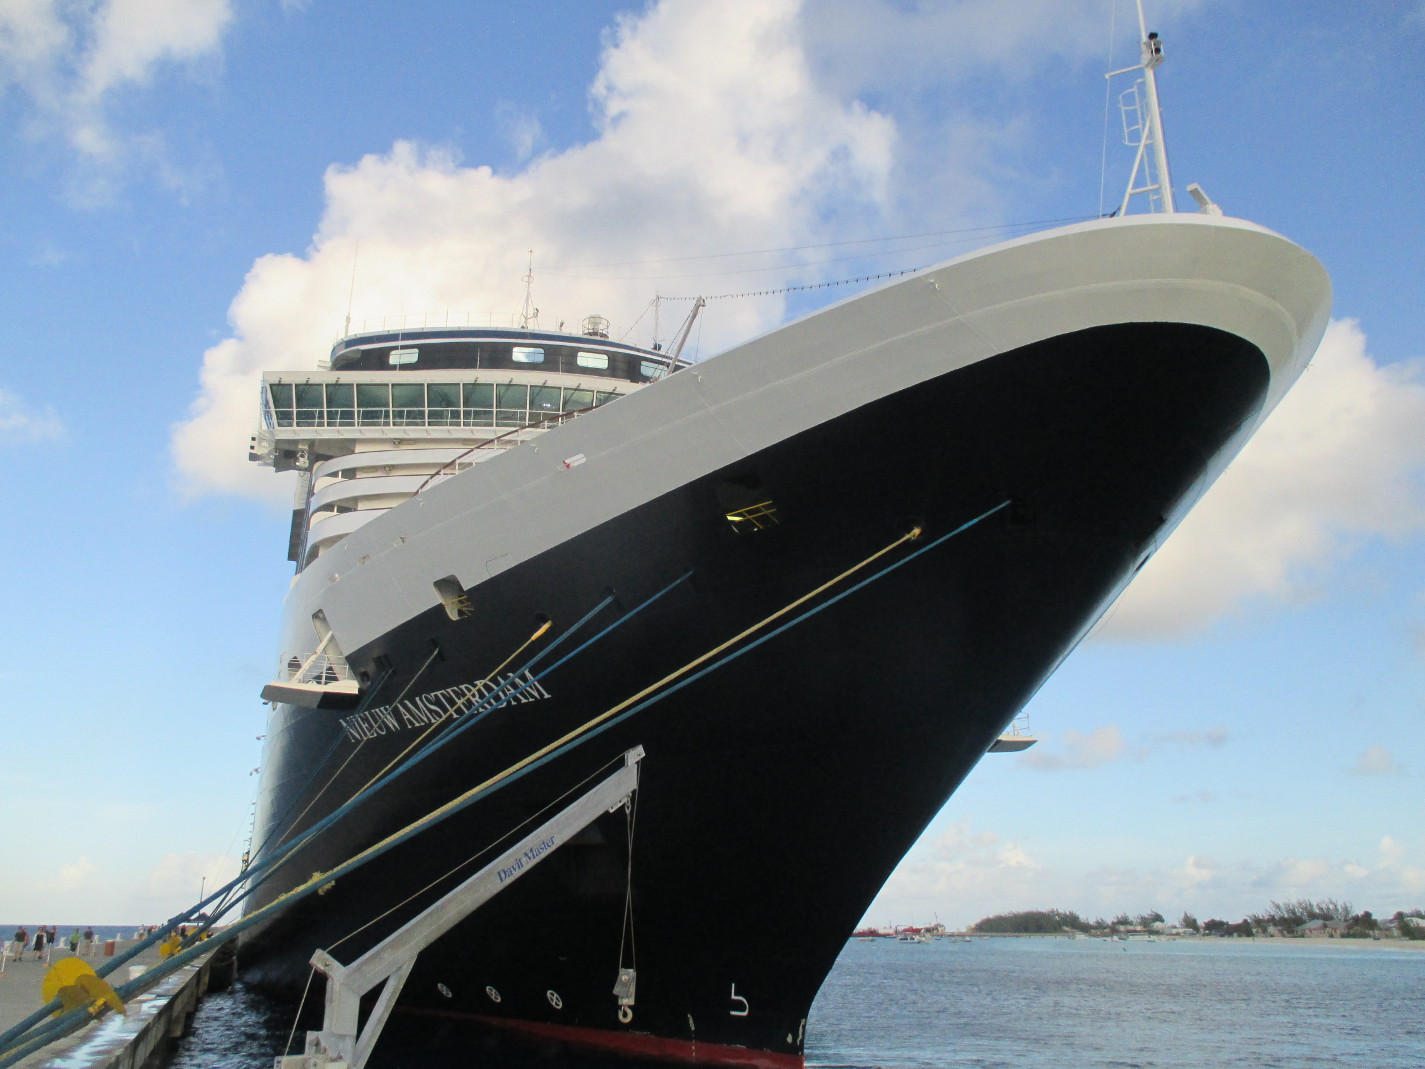 151206to13 - Rosemary's Caribbean Birthday Cruise